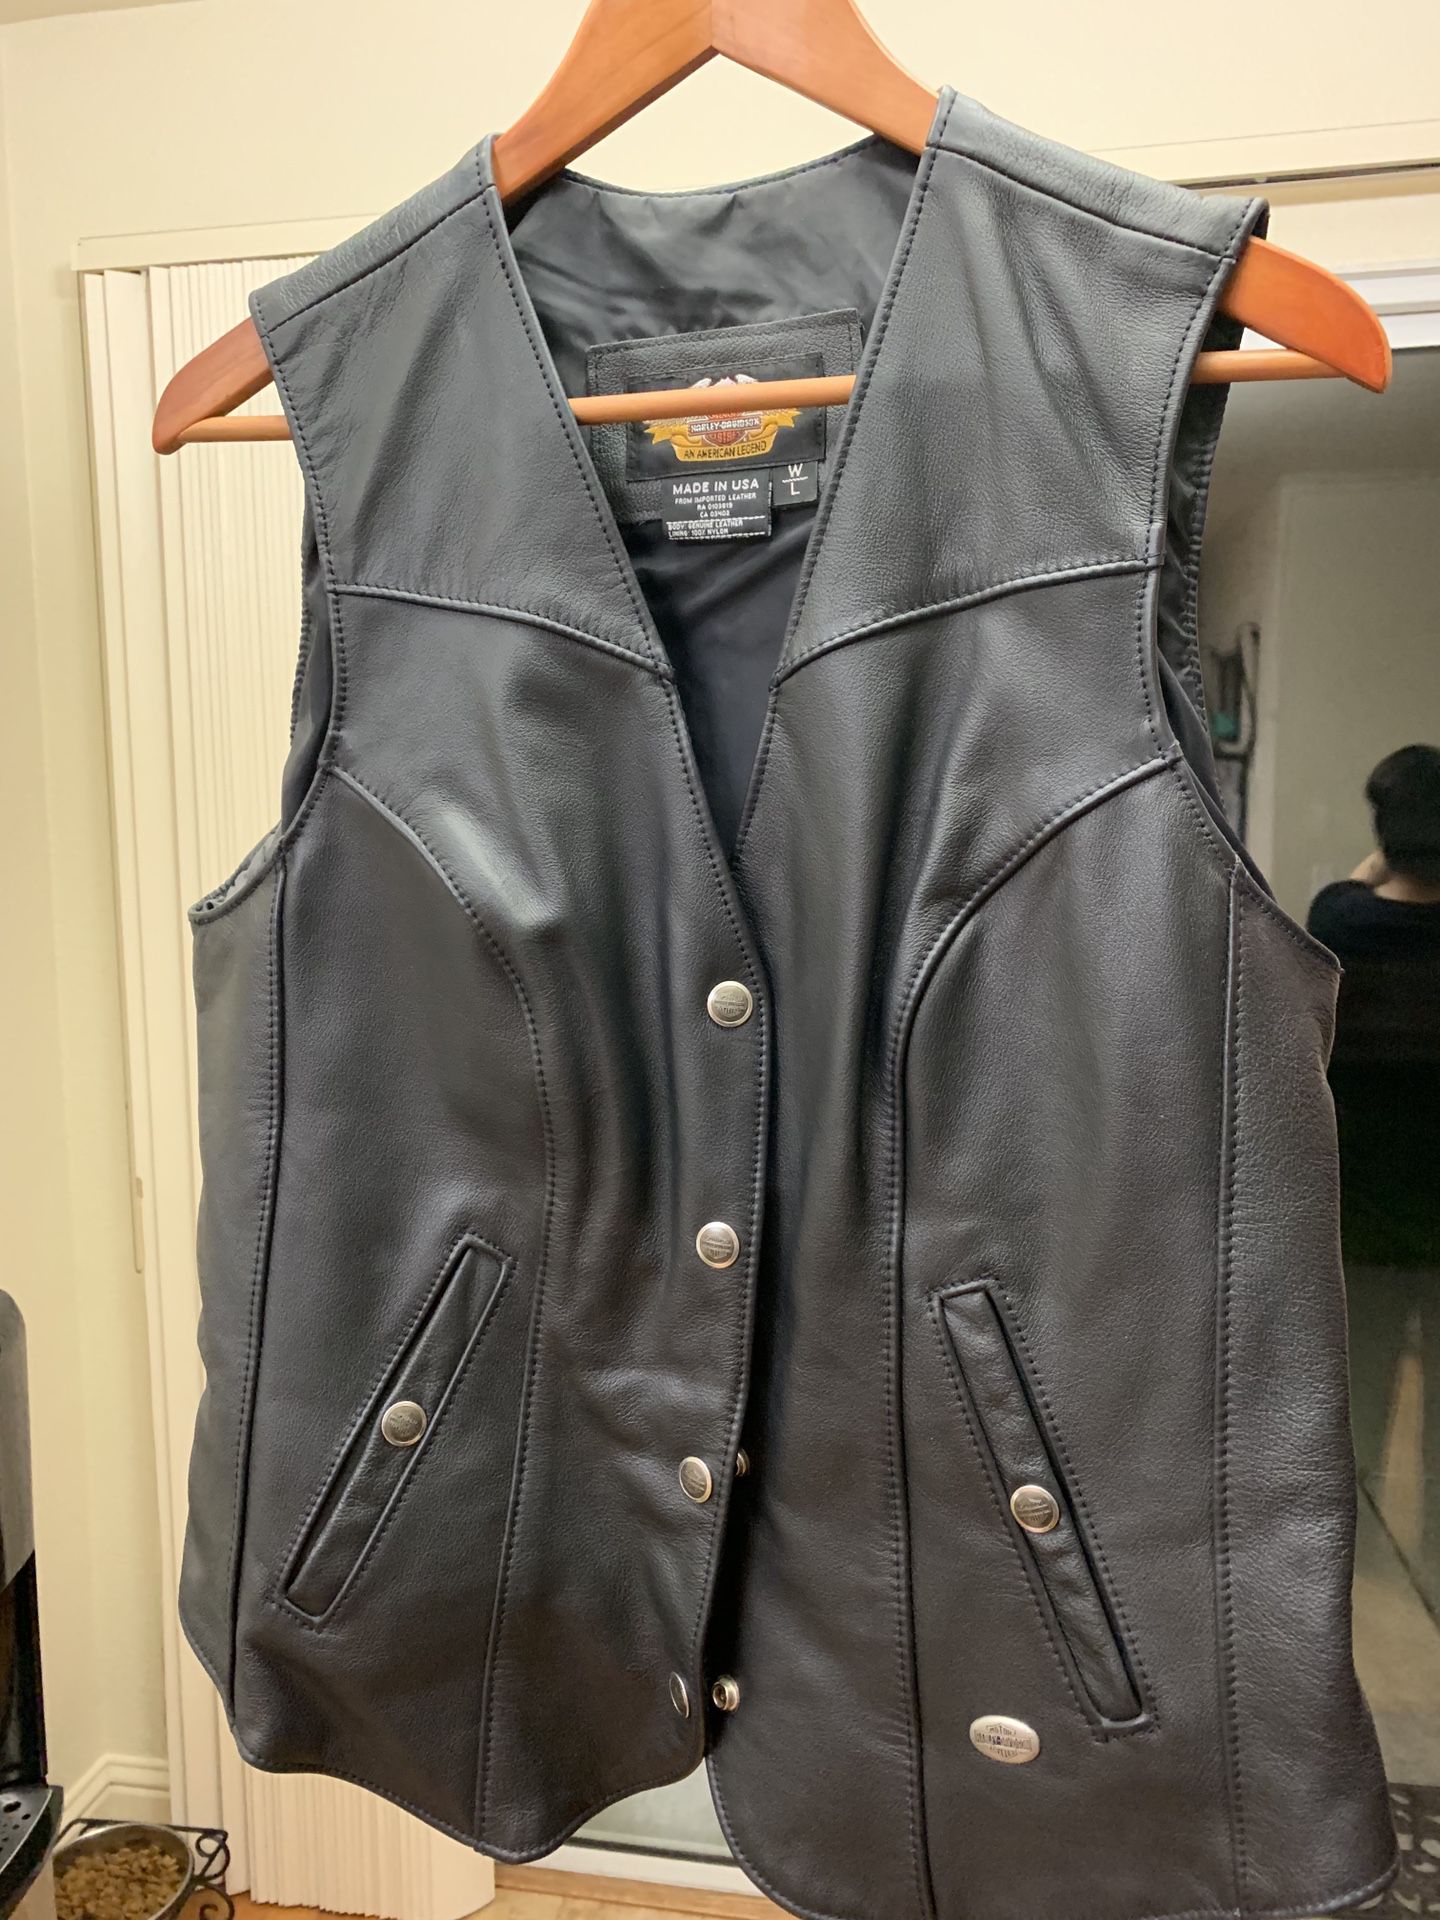 Women’s Harley-Davidson leather vest size Large